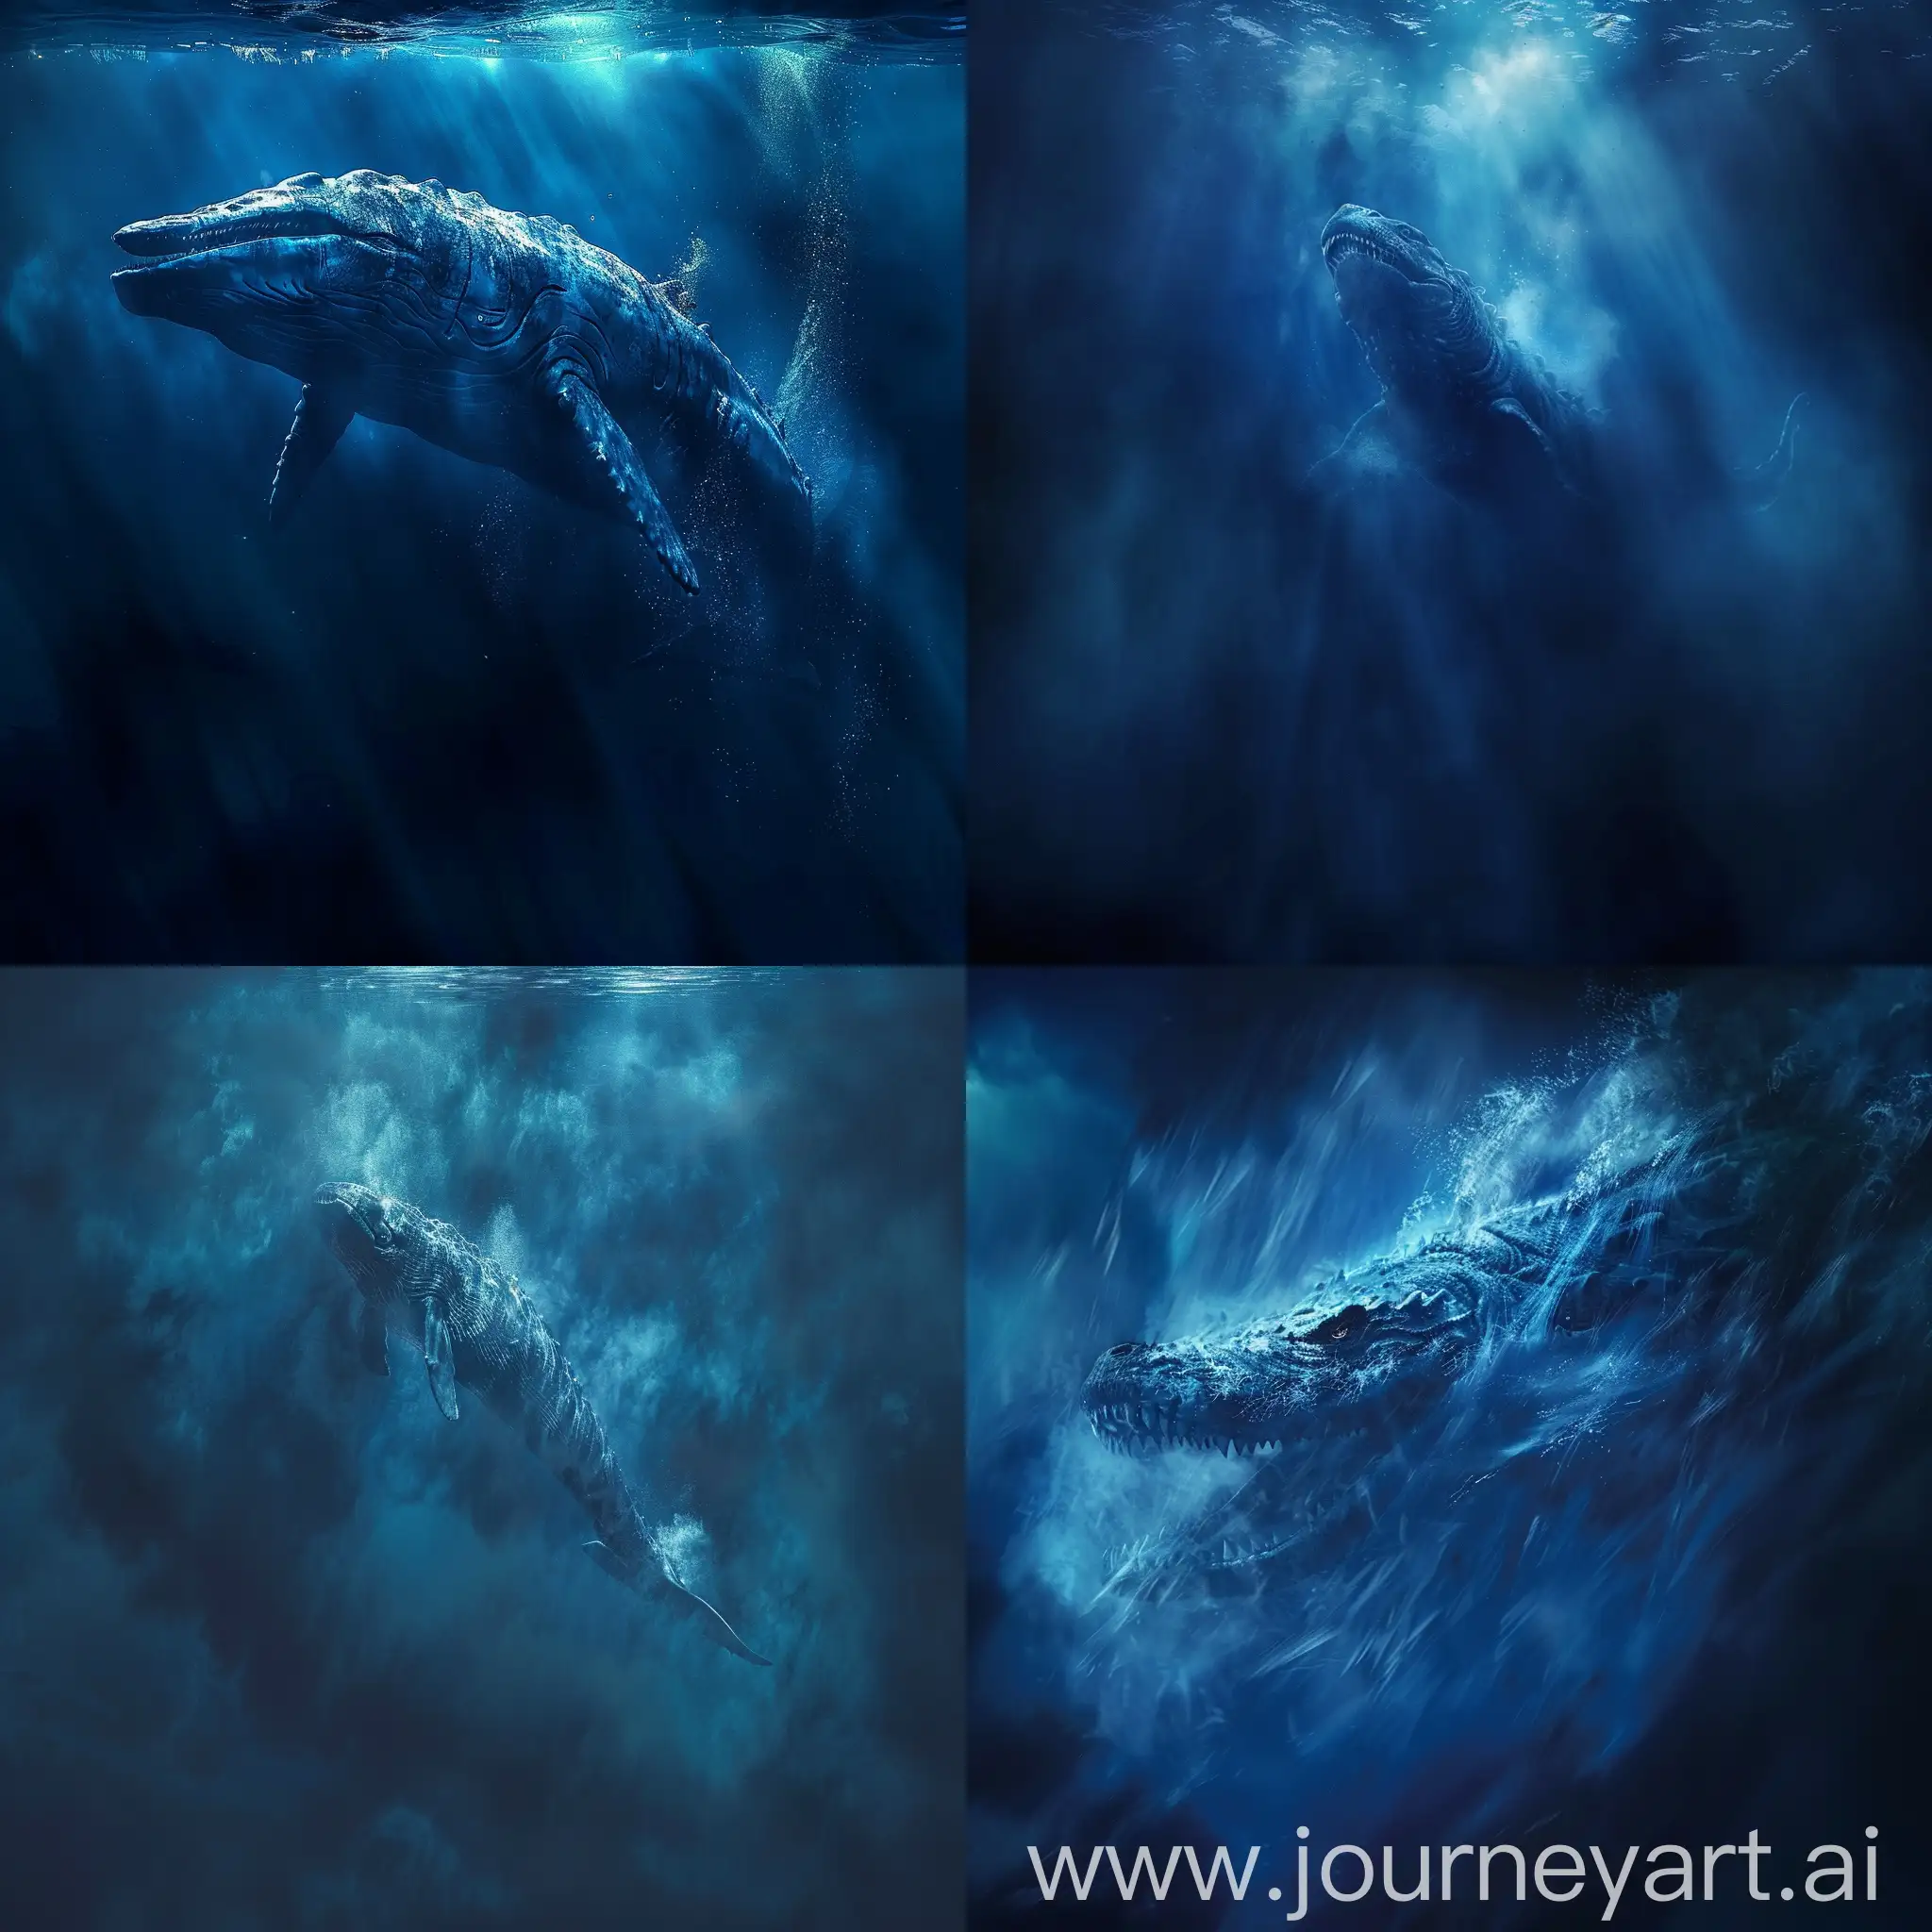 blue dark atmospheric drone image of a sea monster swimming in the ocean, the monster is so huge